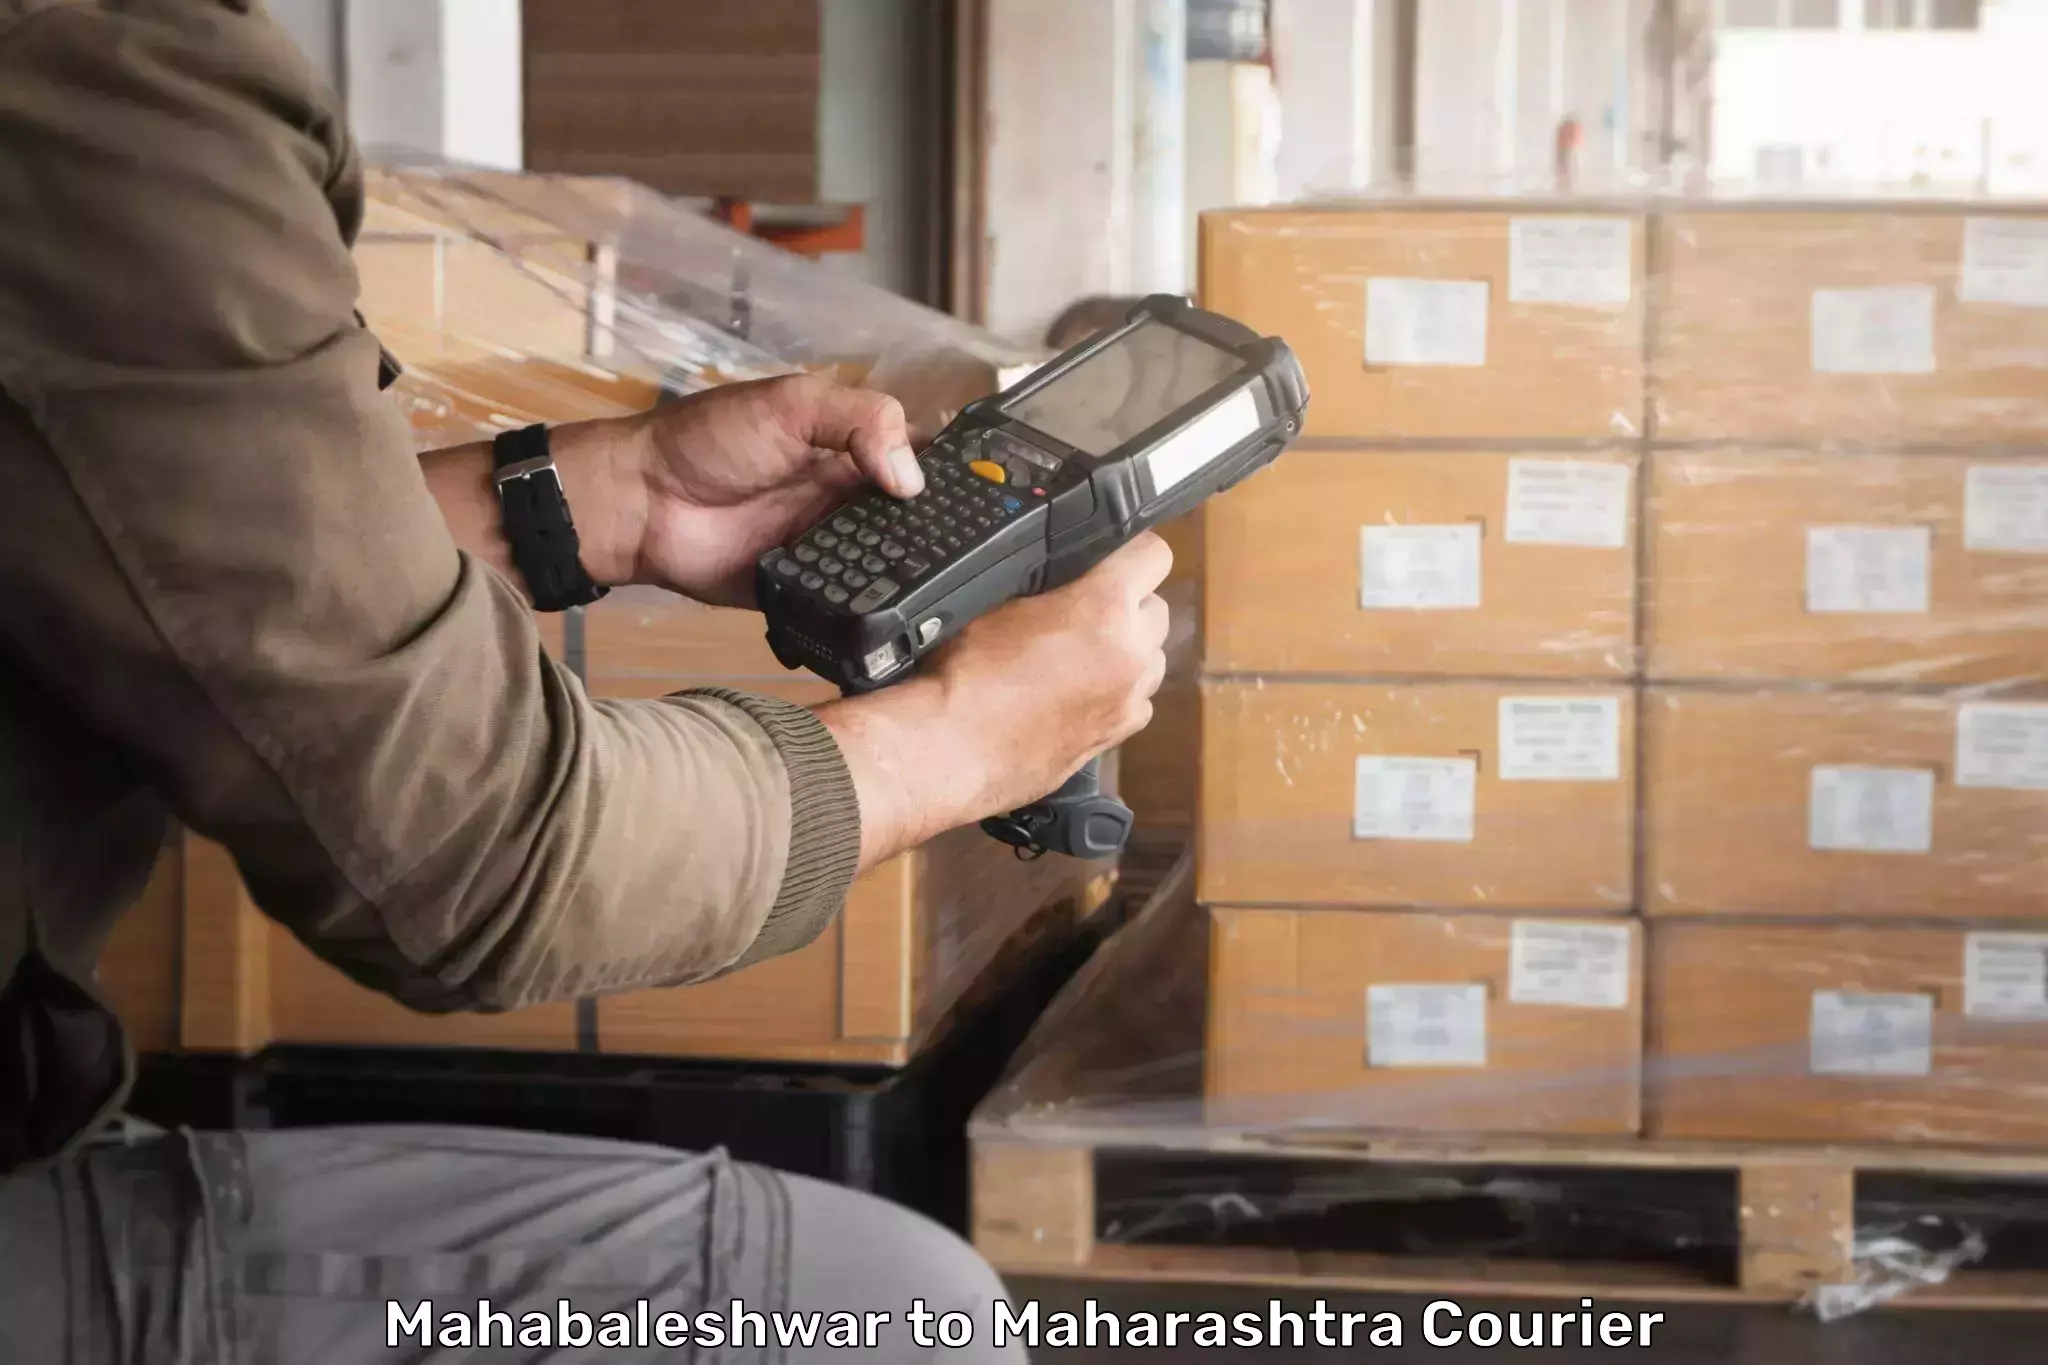 Optimized shipping routes in Mahabaleshwar to Dadar